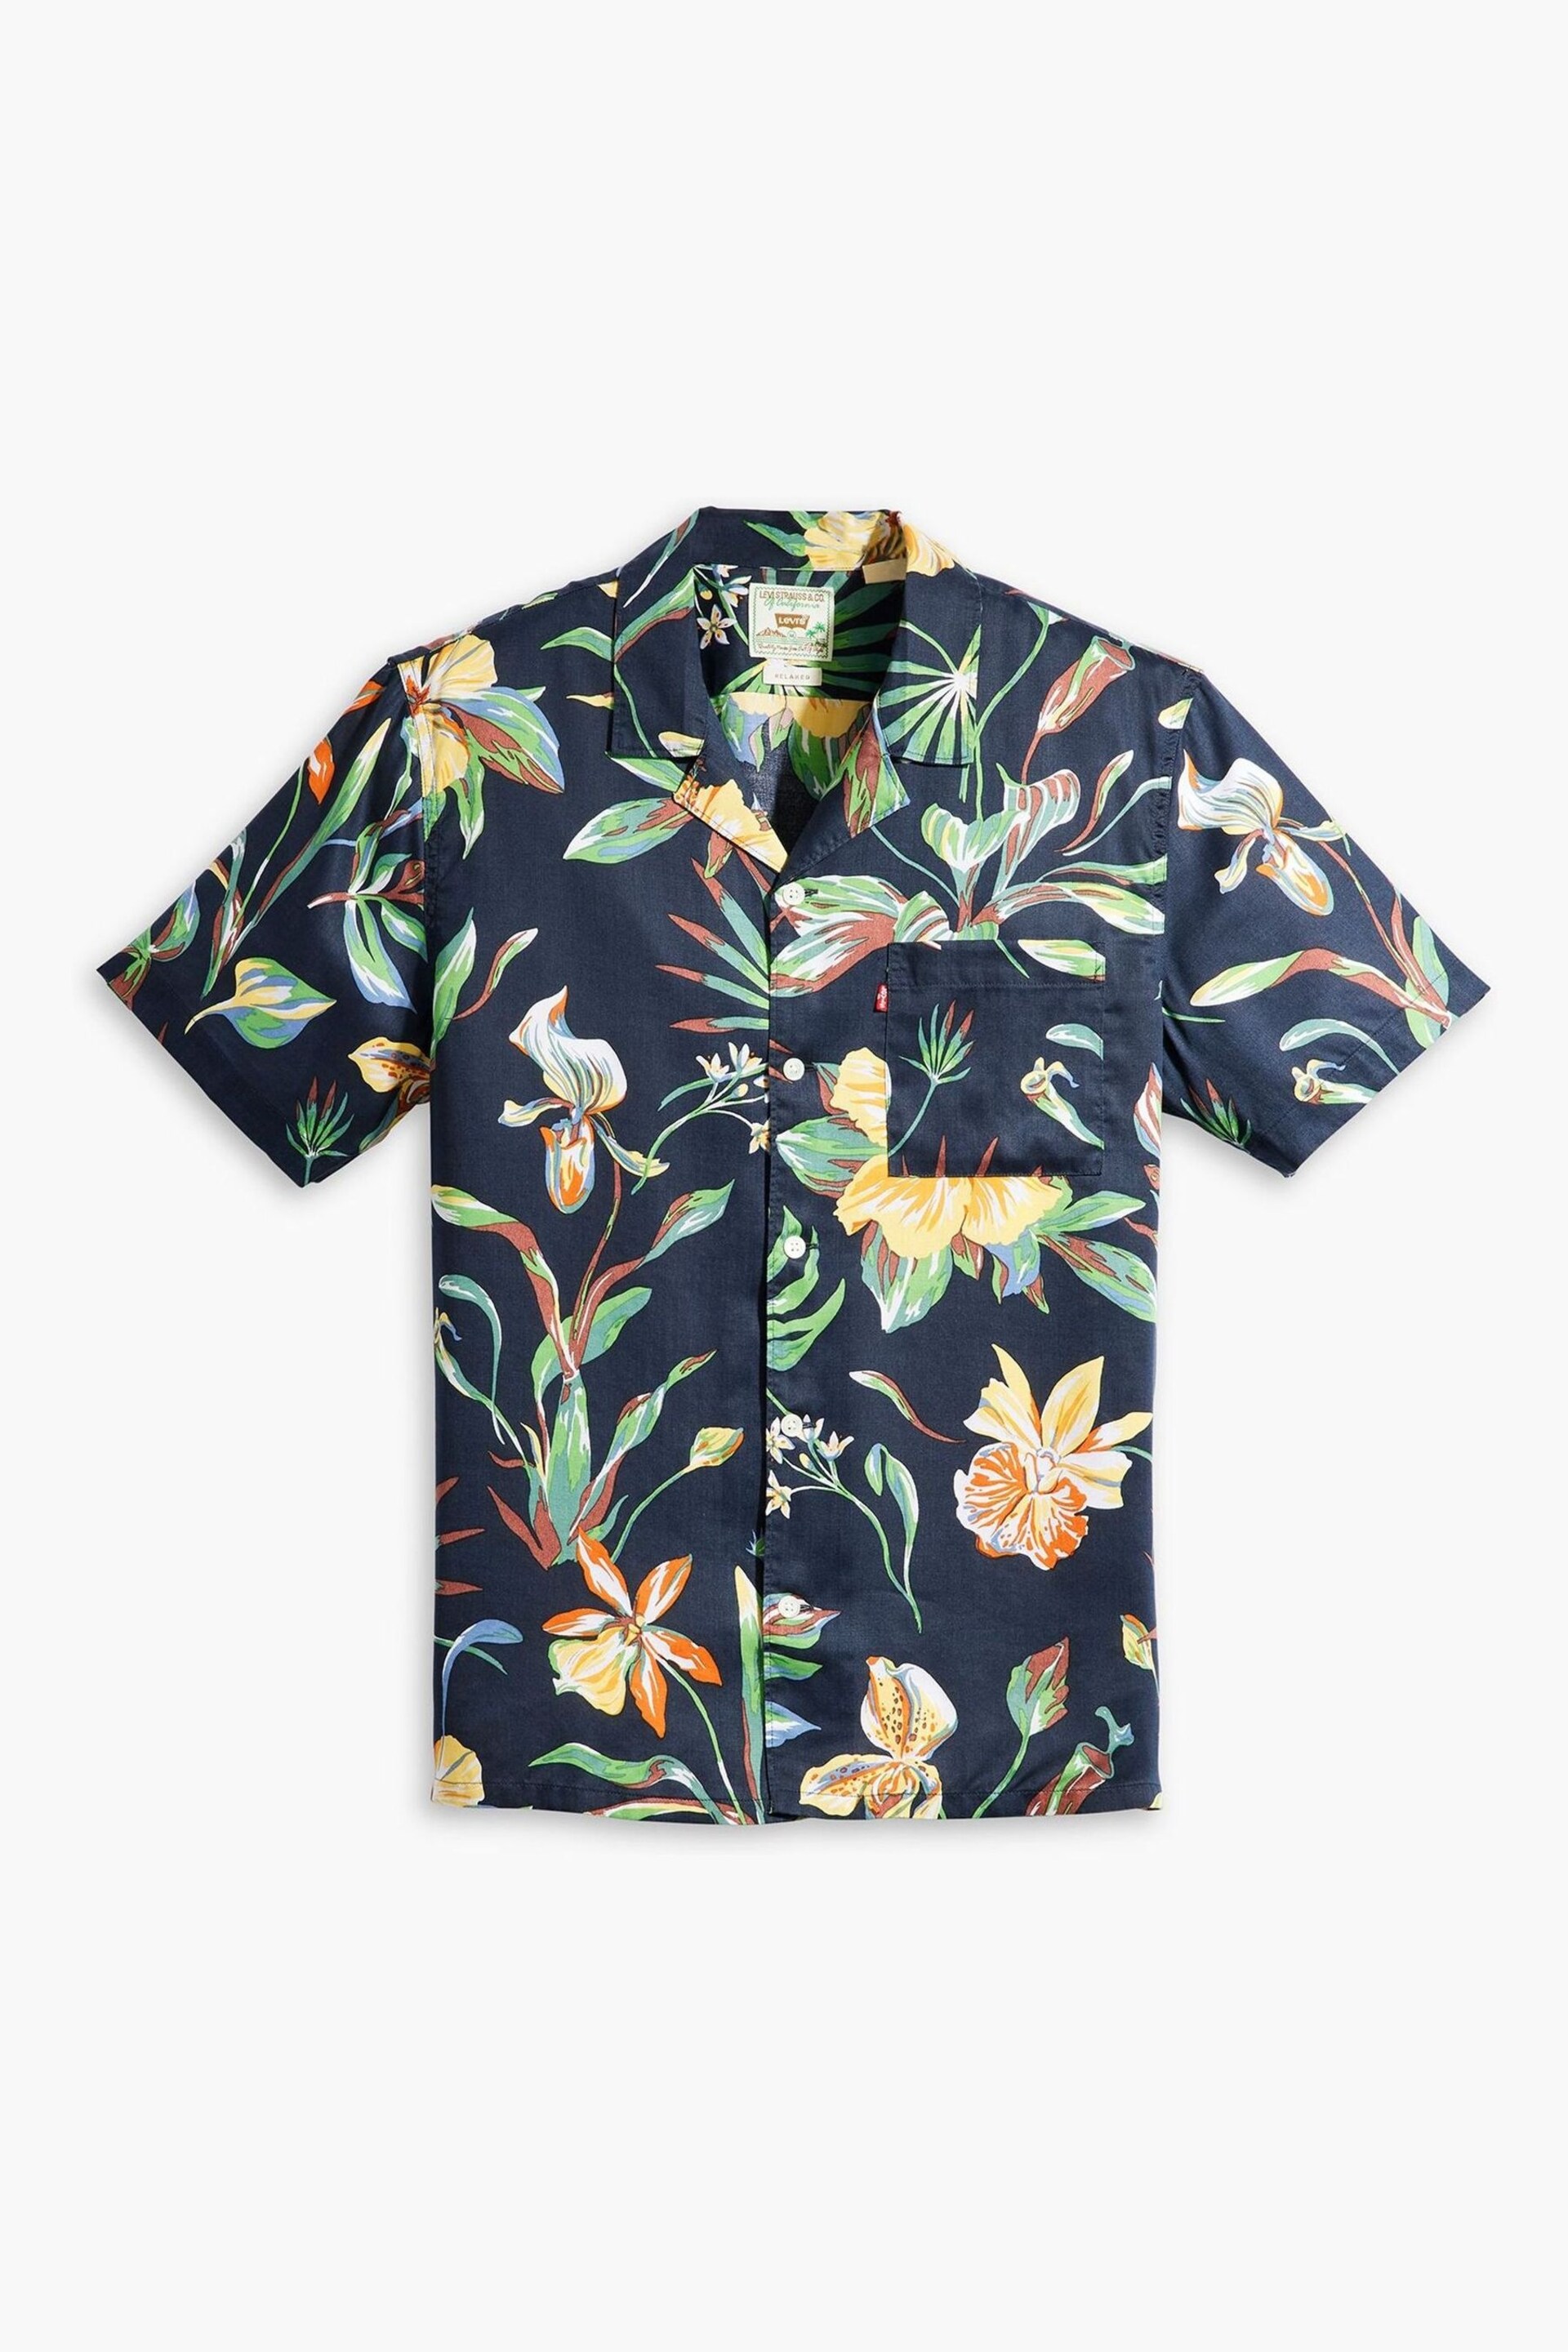 Levi's® Nepenthe Floral Navy Sunset Camp Shirt - Image 1 of 3